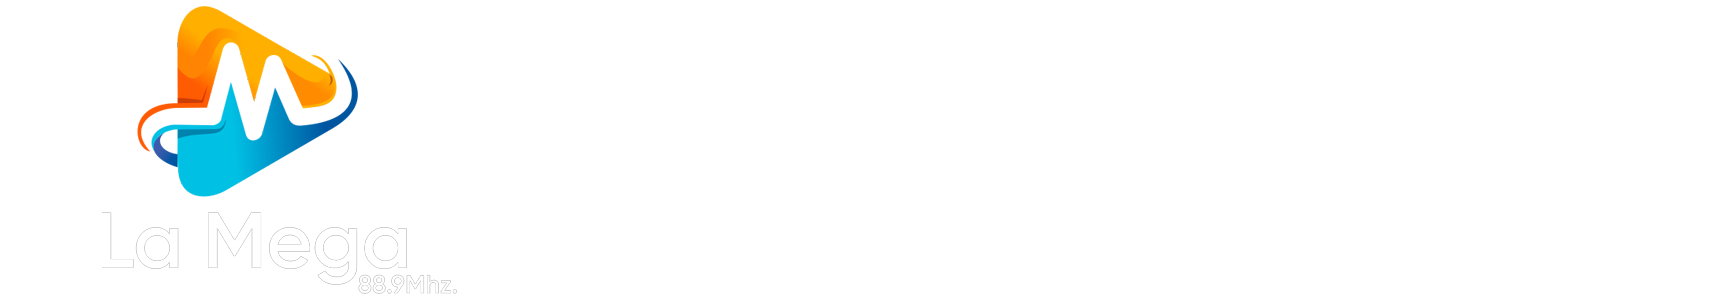 La Mega Romang TV logo